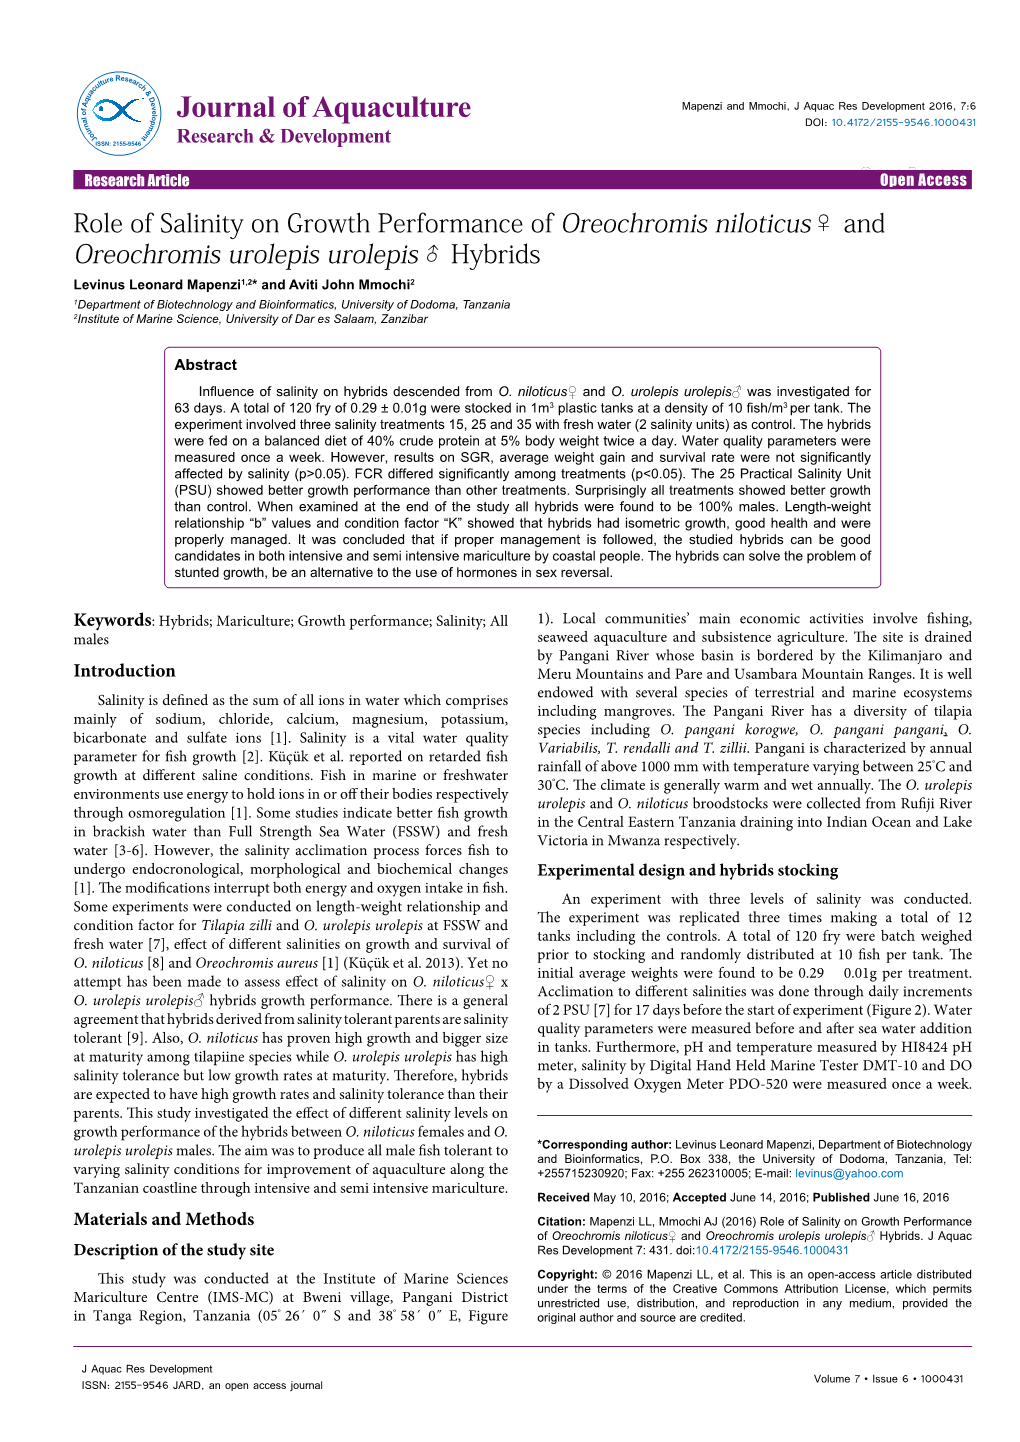 Role of Salinity on Growth Performance of Oreochromis